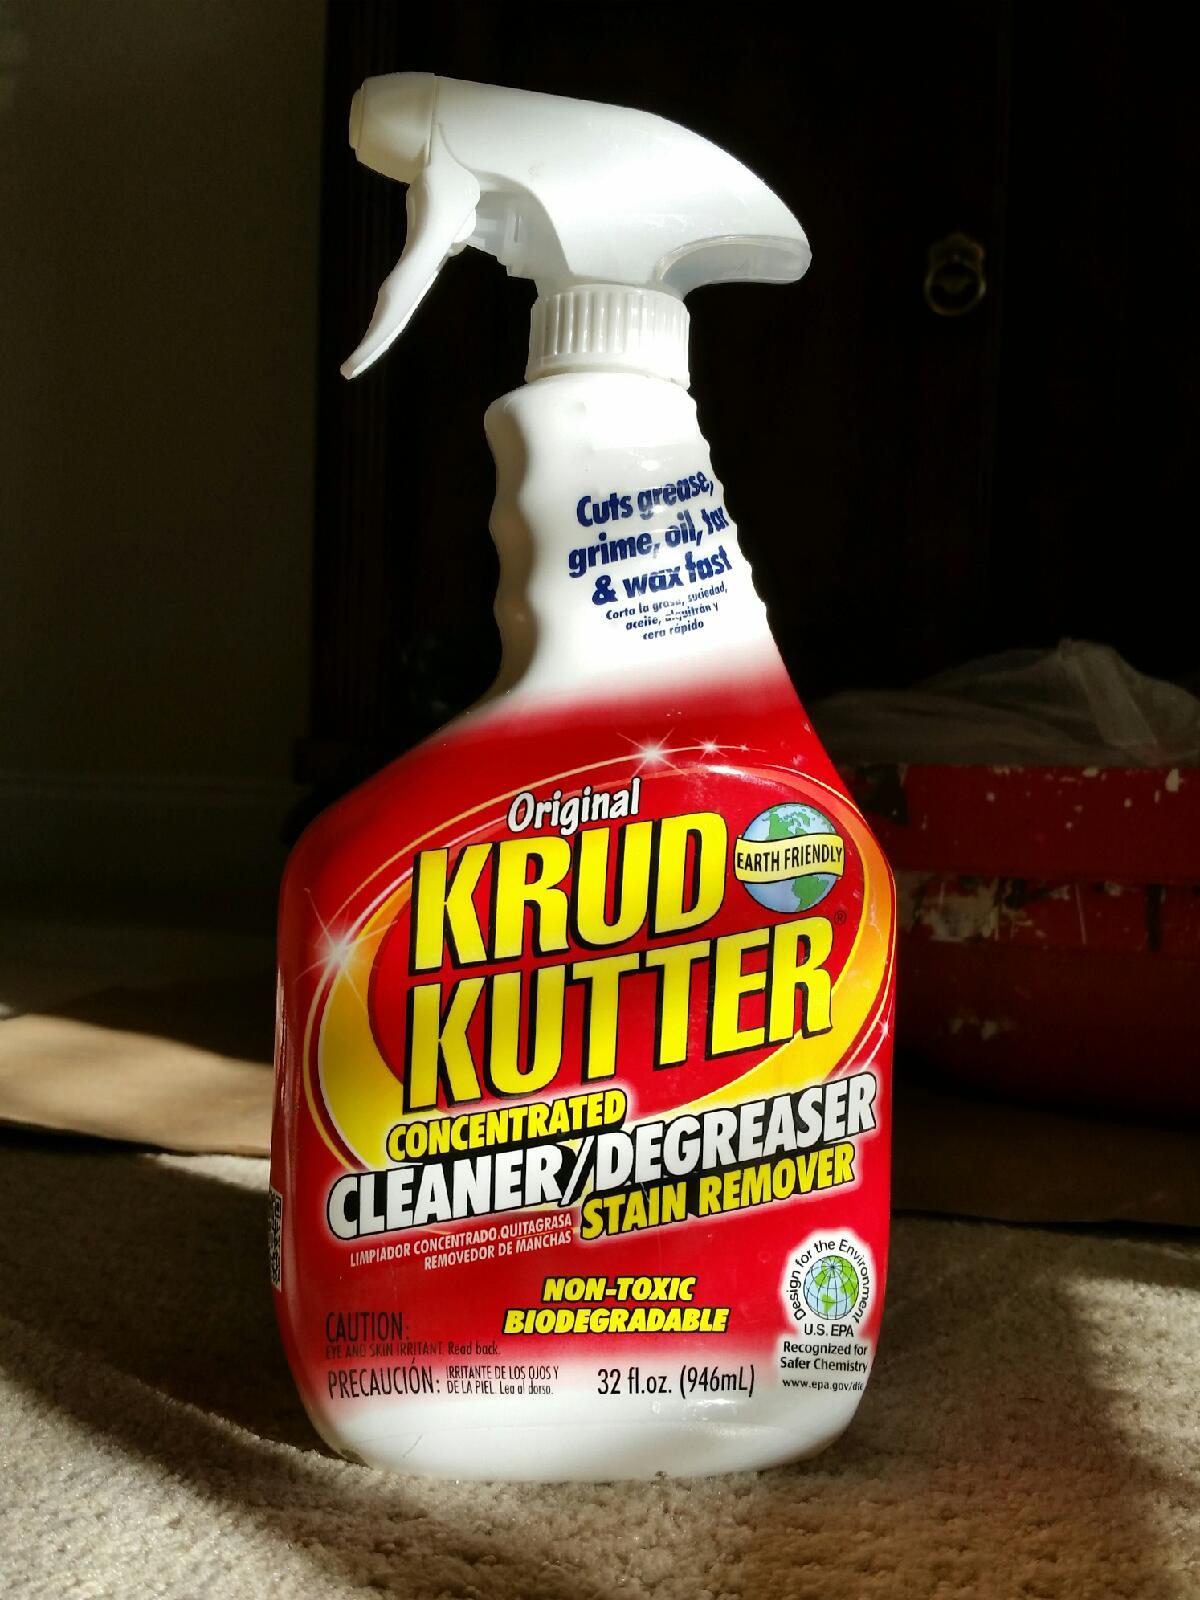 Krud Kutter® Latex Paint Remover Spray - 8 oz. at Menards®